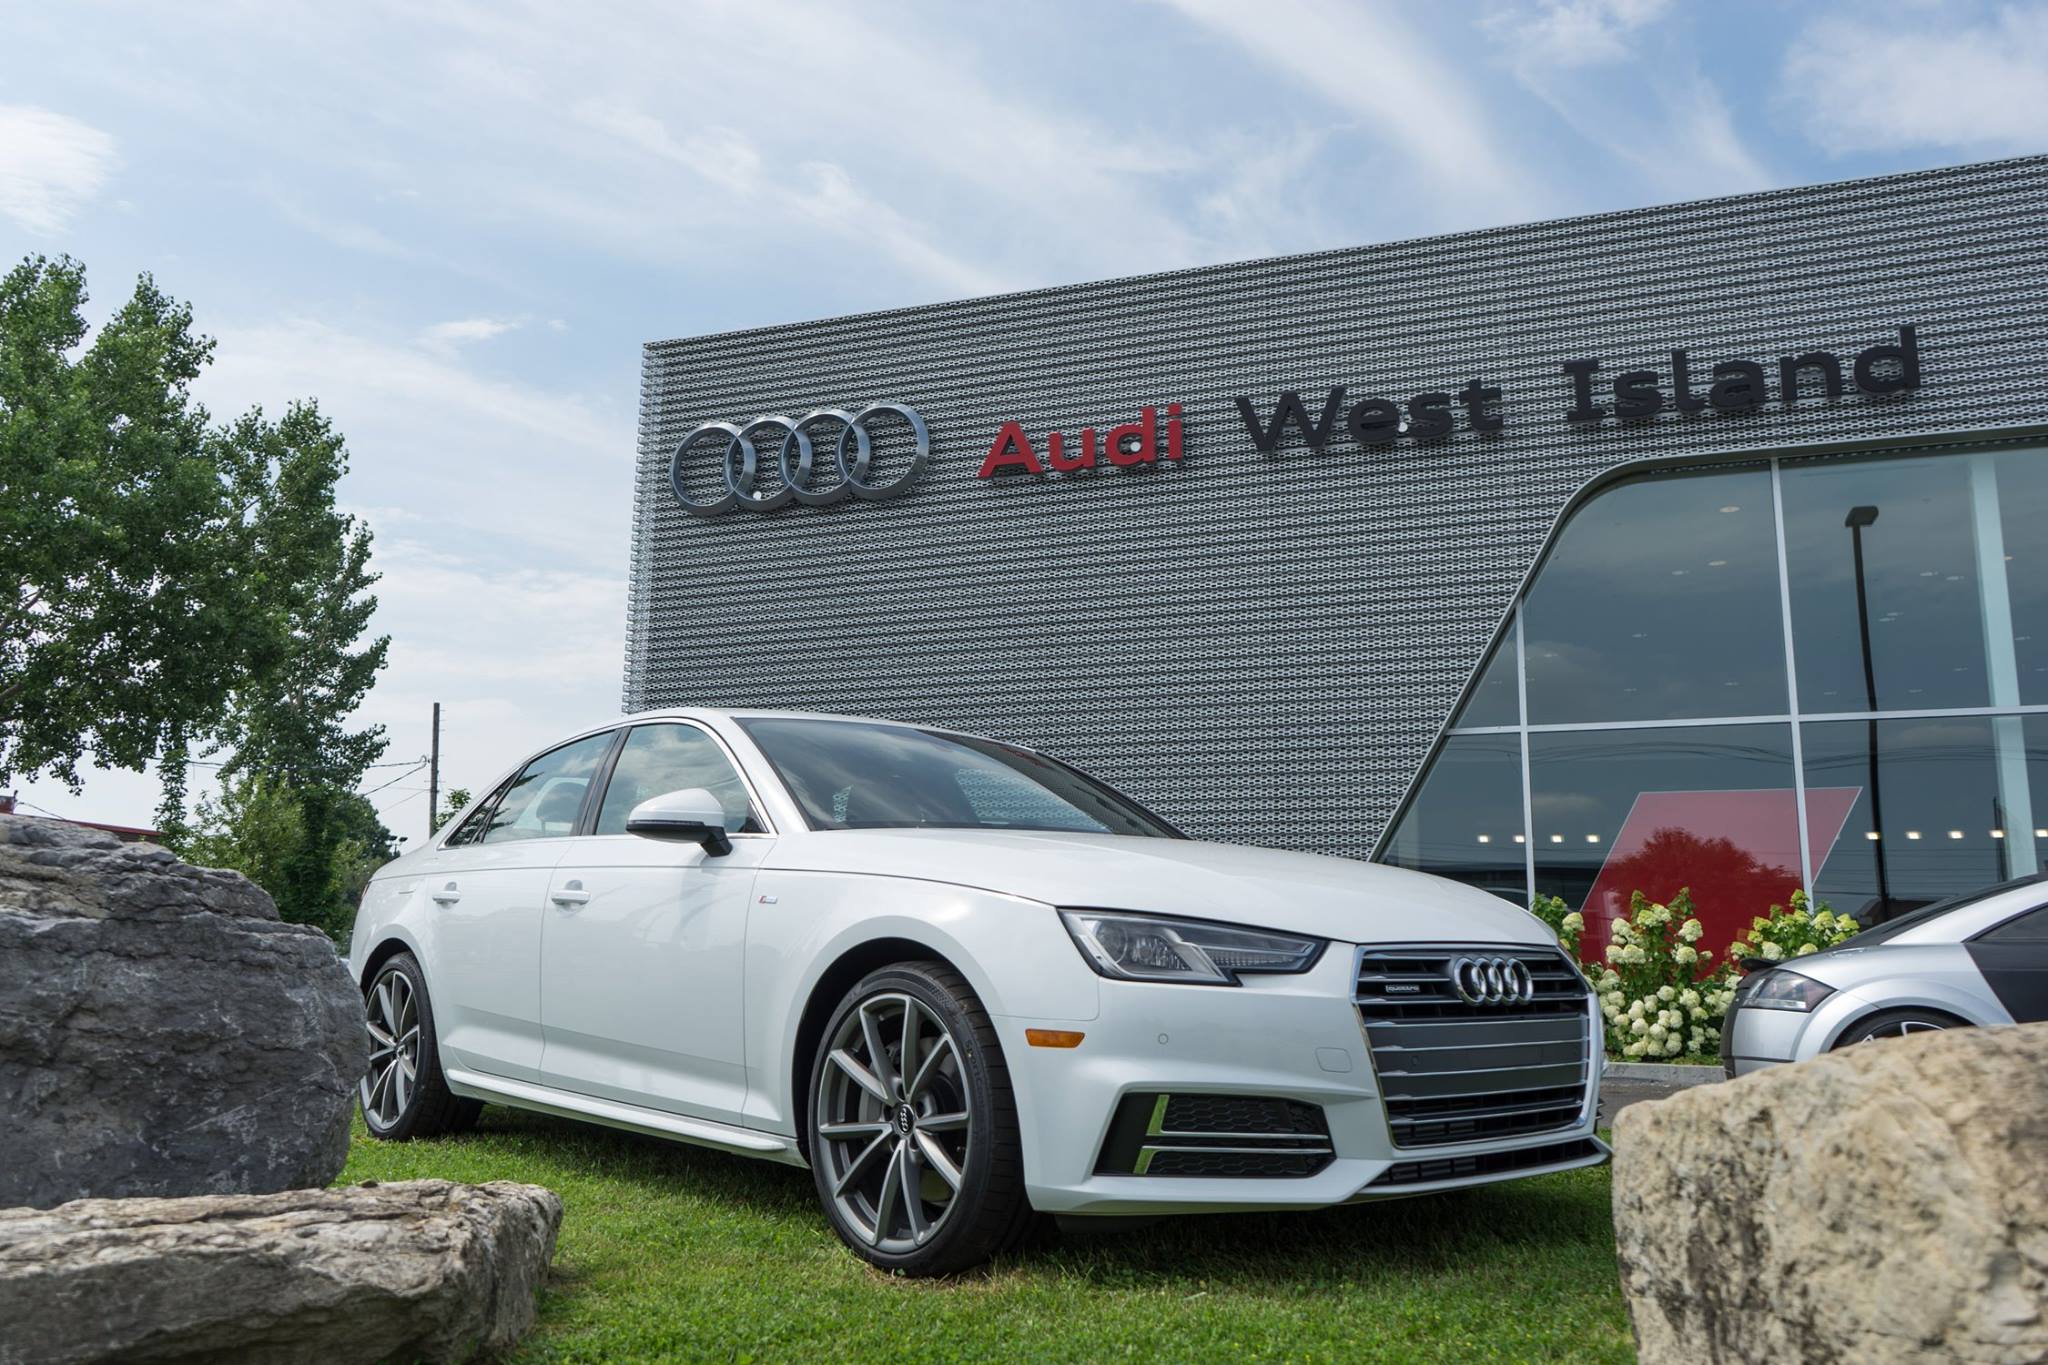 Exterior - Audi West Island (2)